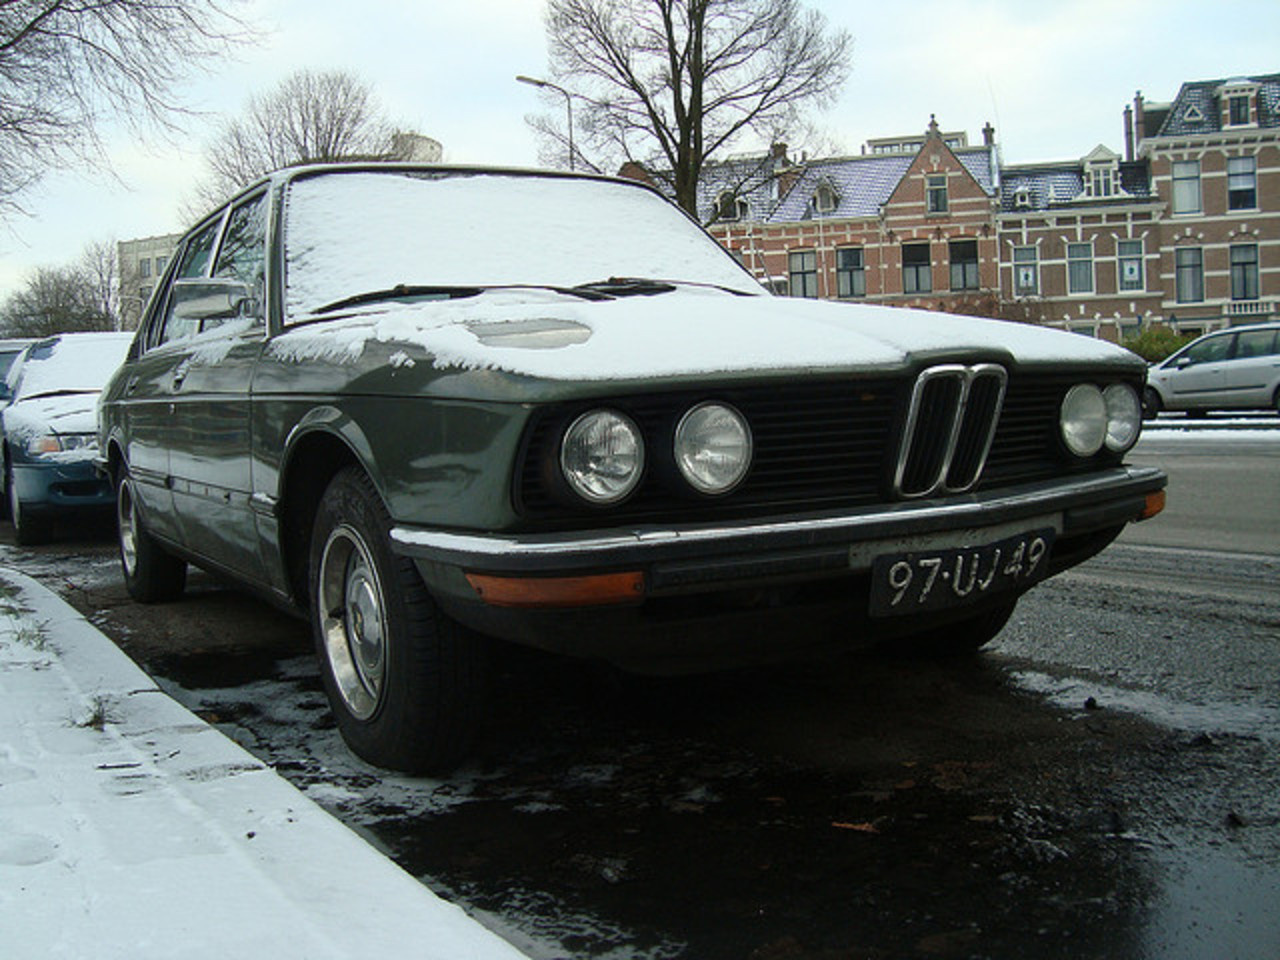 1978 BMW 520 | Flickr - Photo Sharing!